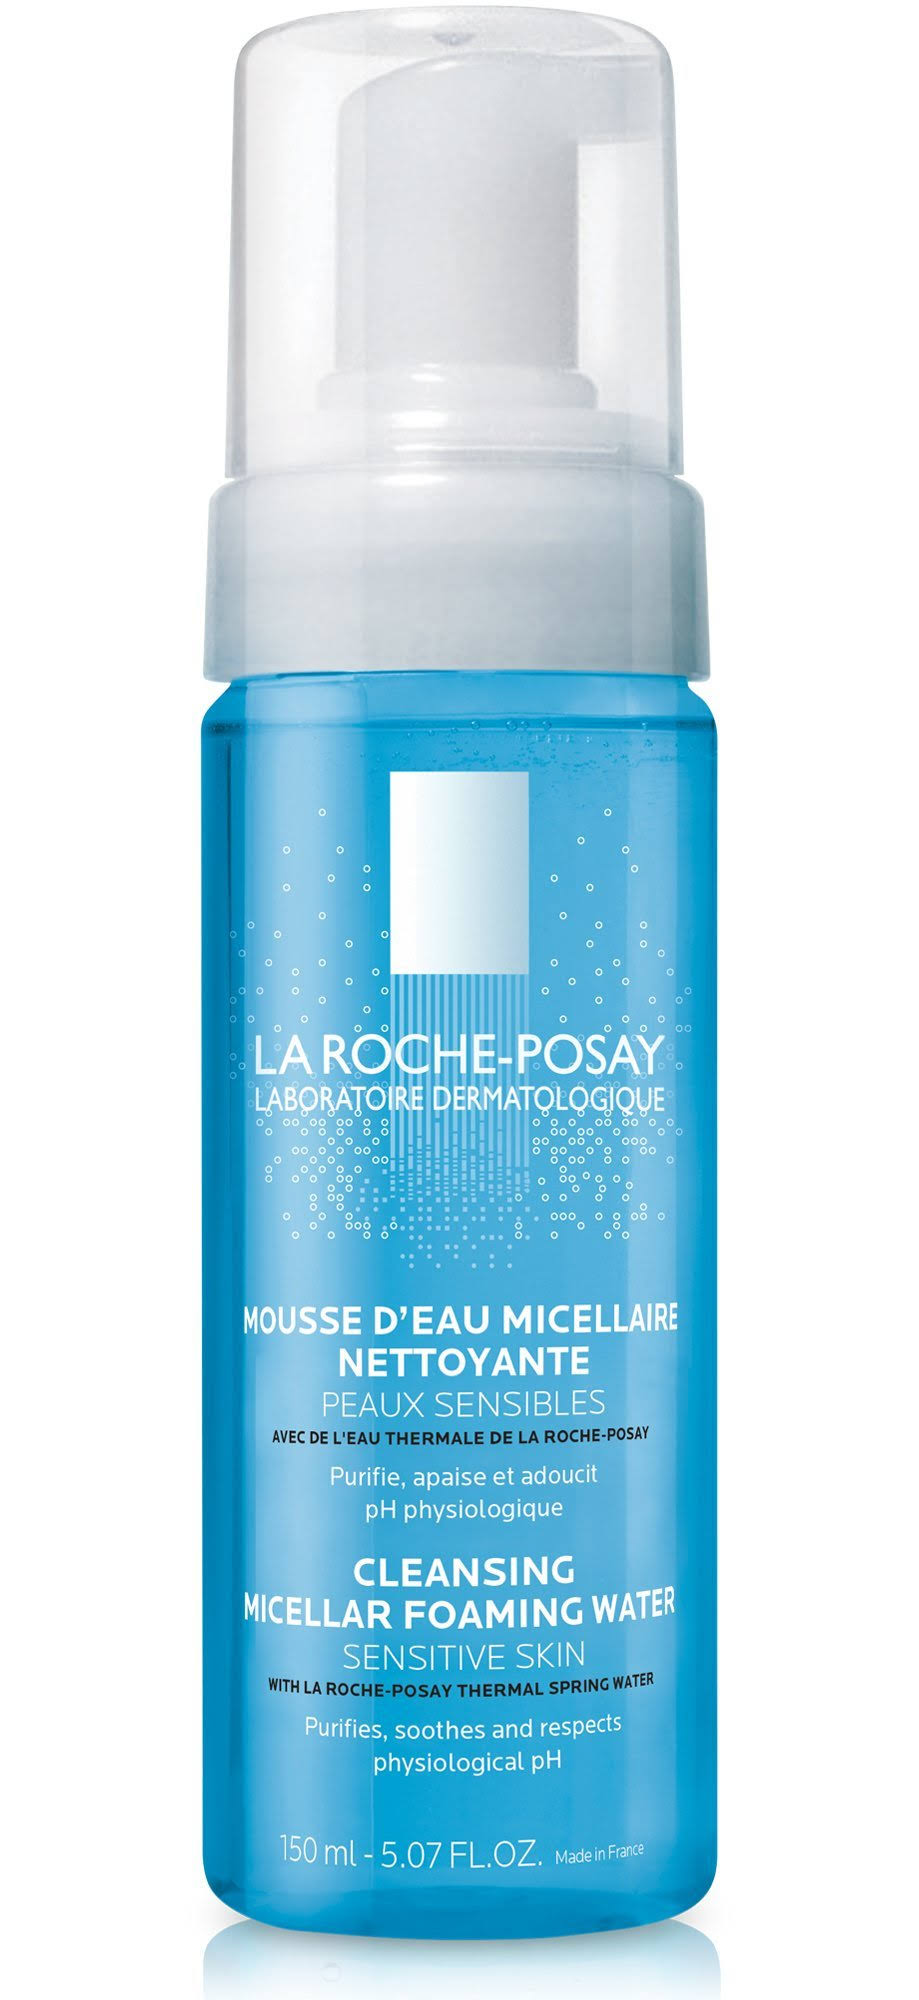 La Roche-Posay Cleansing Micellar Foaming Water for Sensitive Skin - 150ml